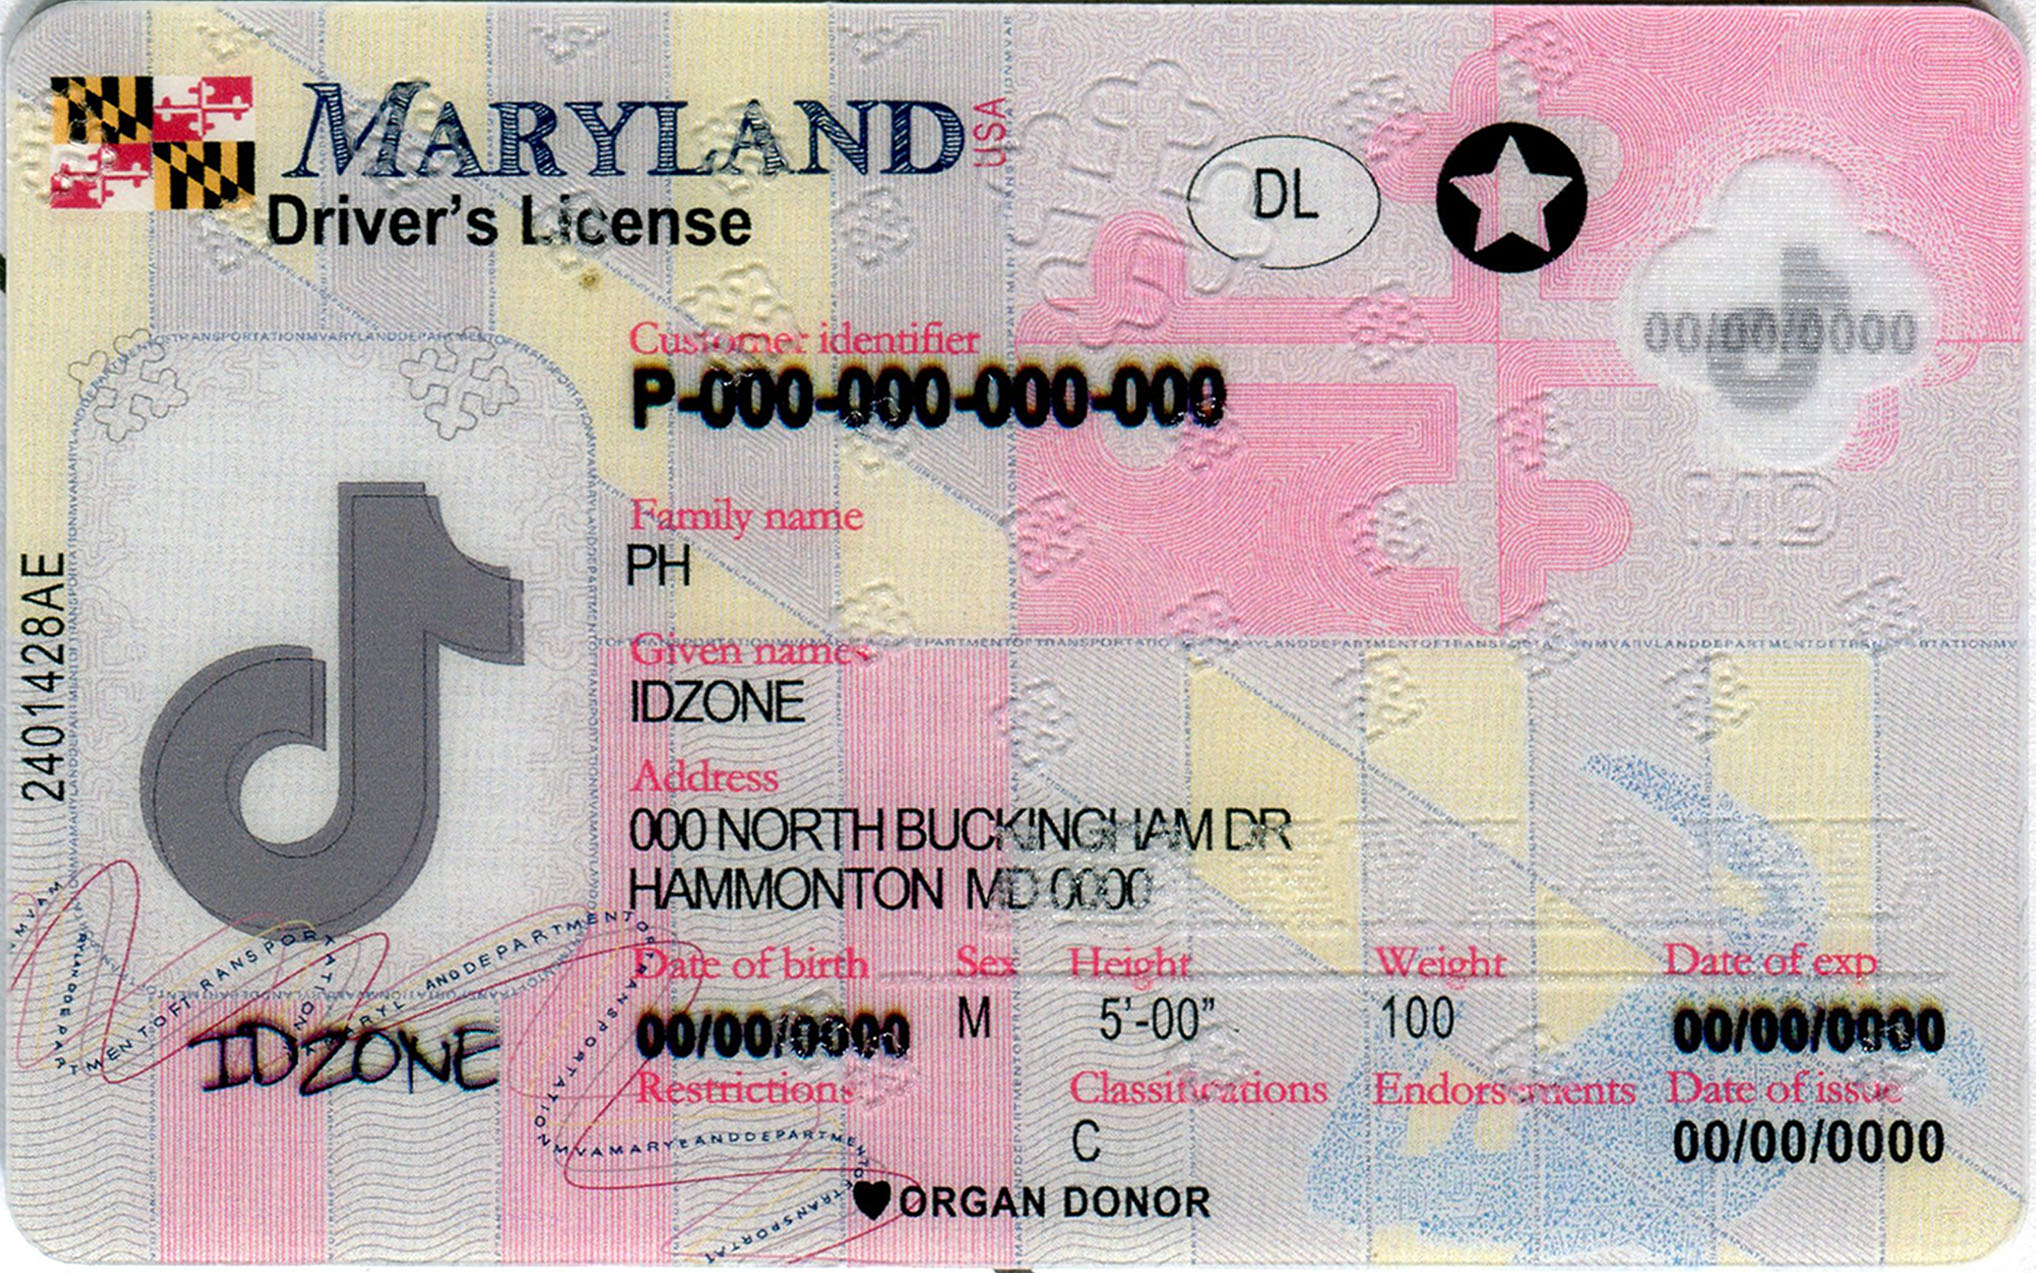 MARYLAND-New buy fake id